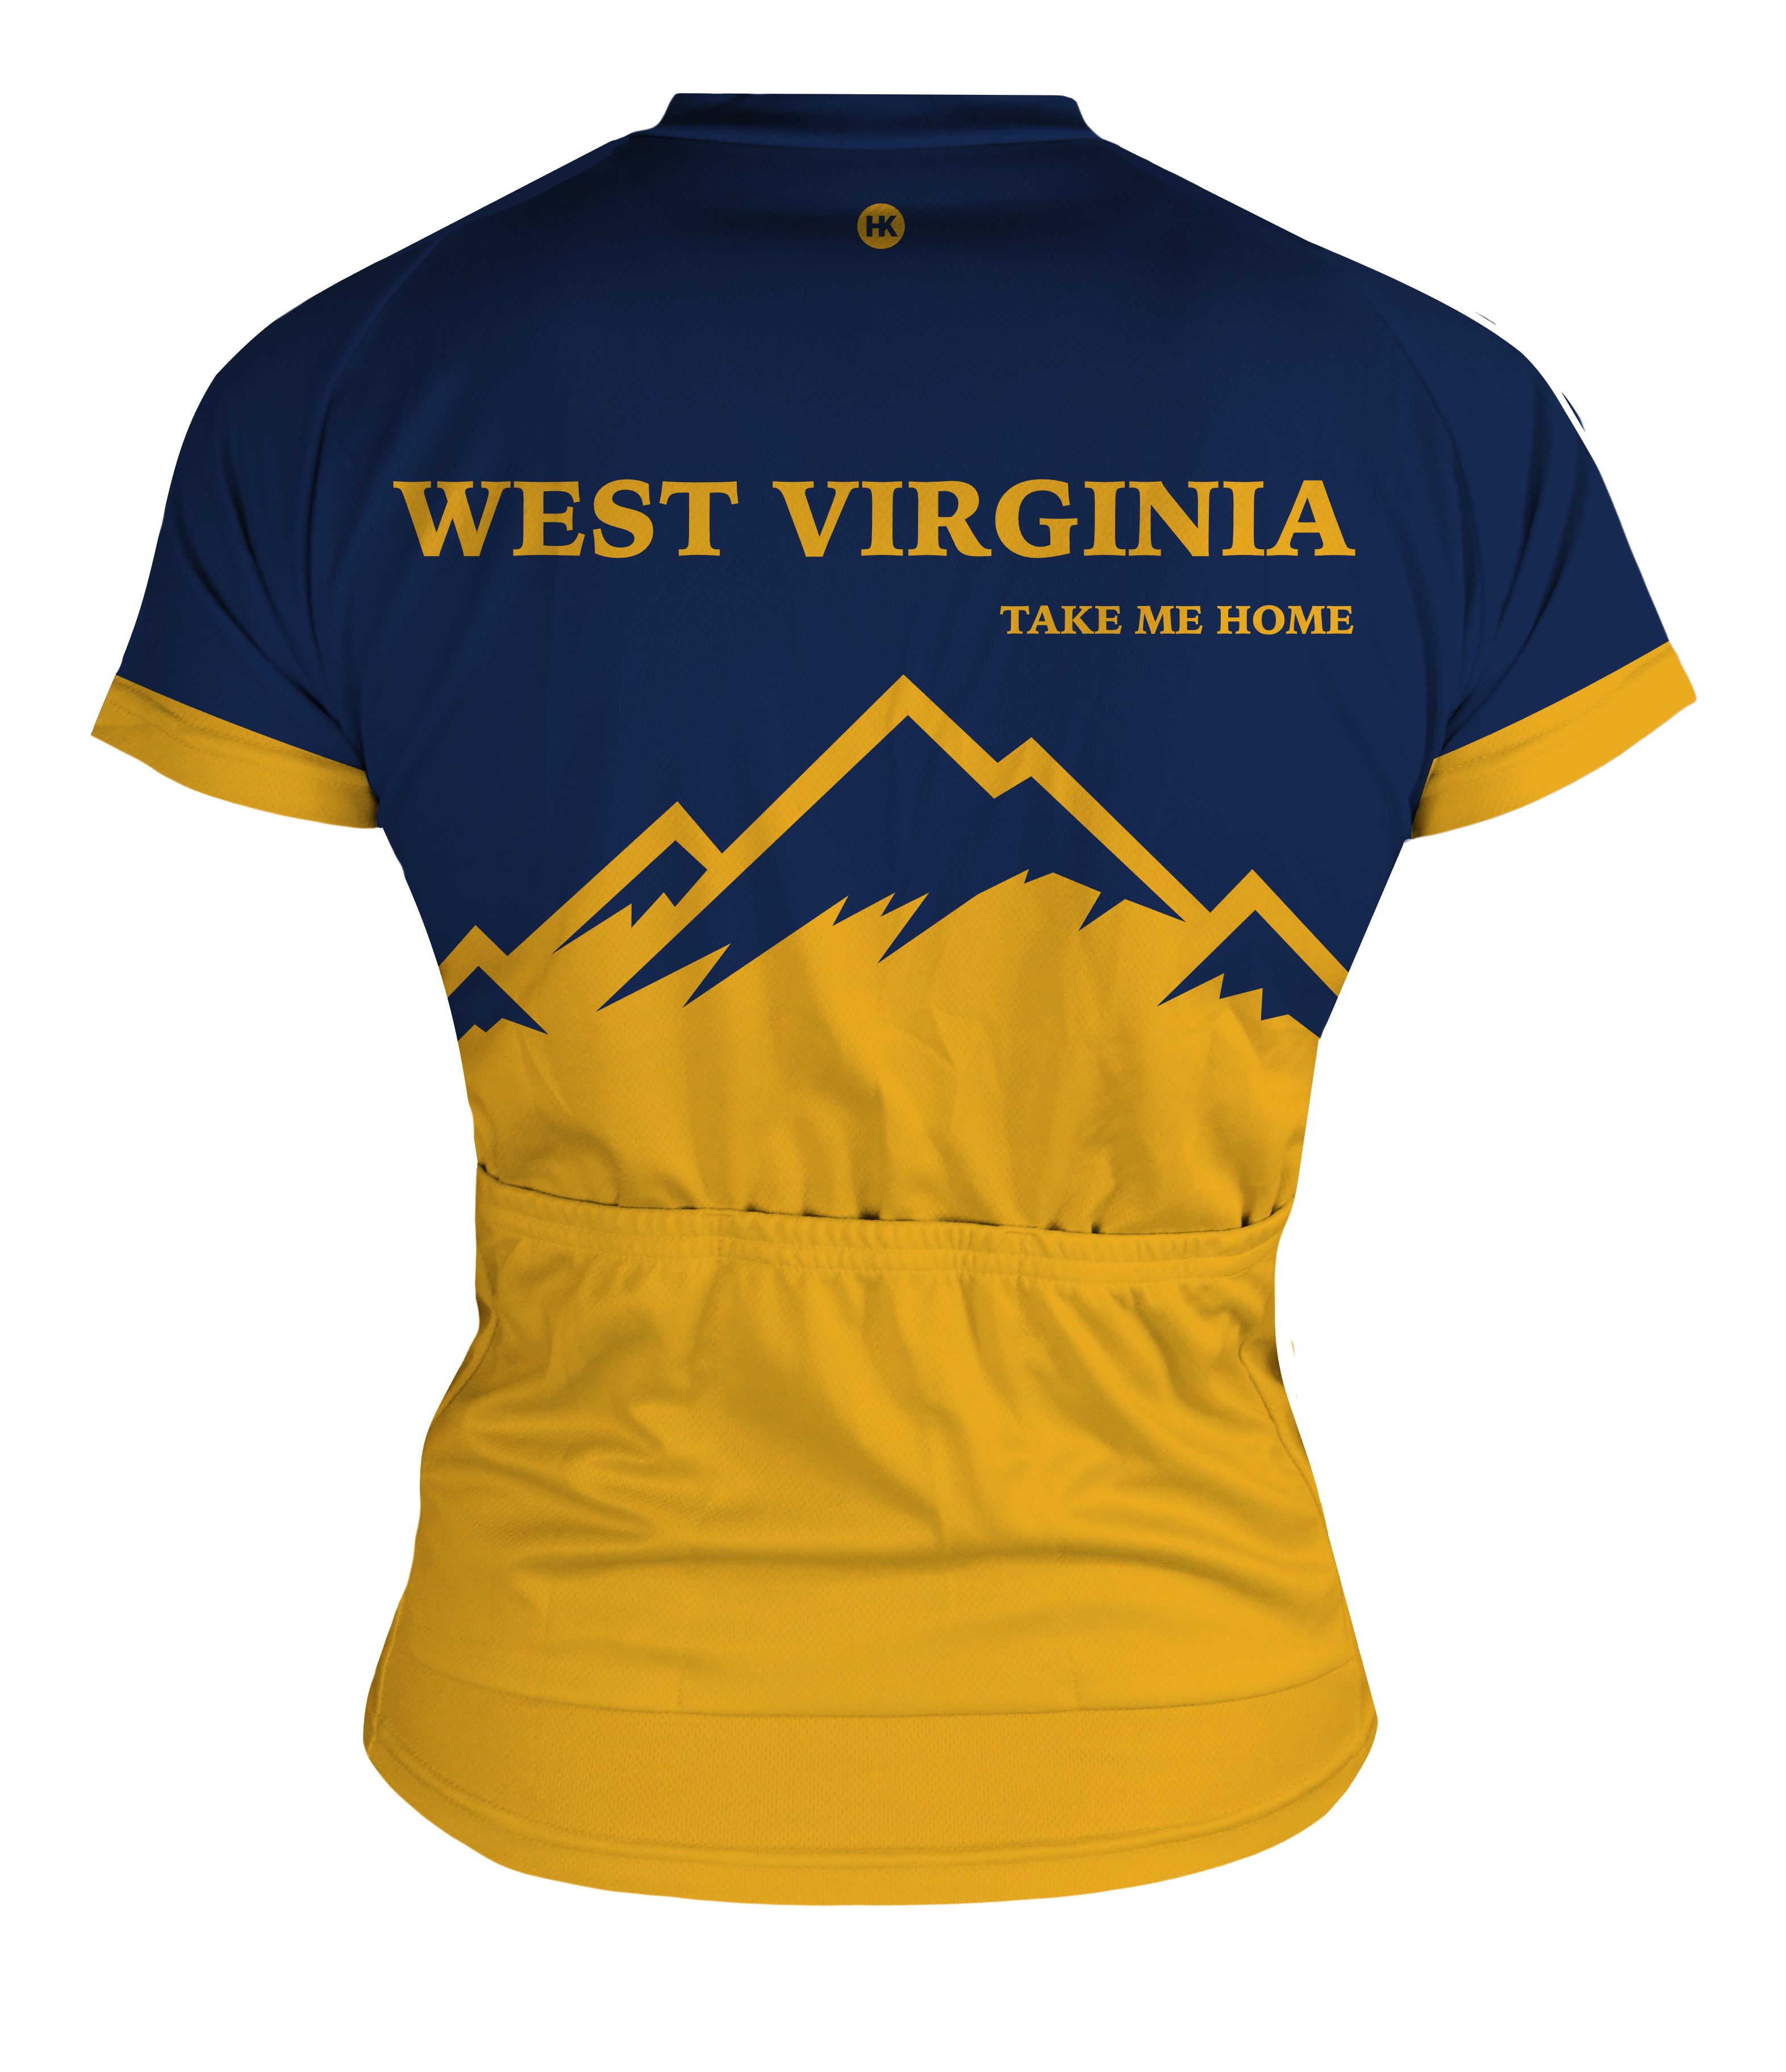 West Virginia Women's Club-Cut Cycling Jersey by Hill Killer